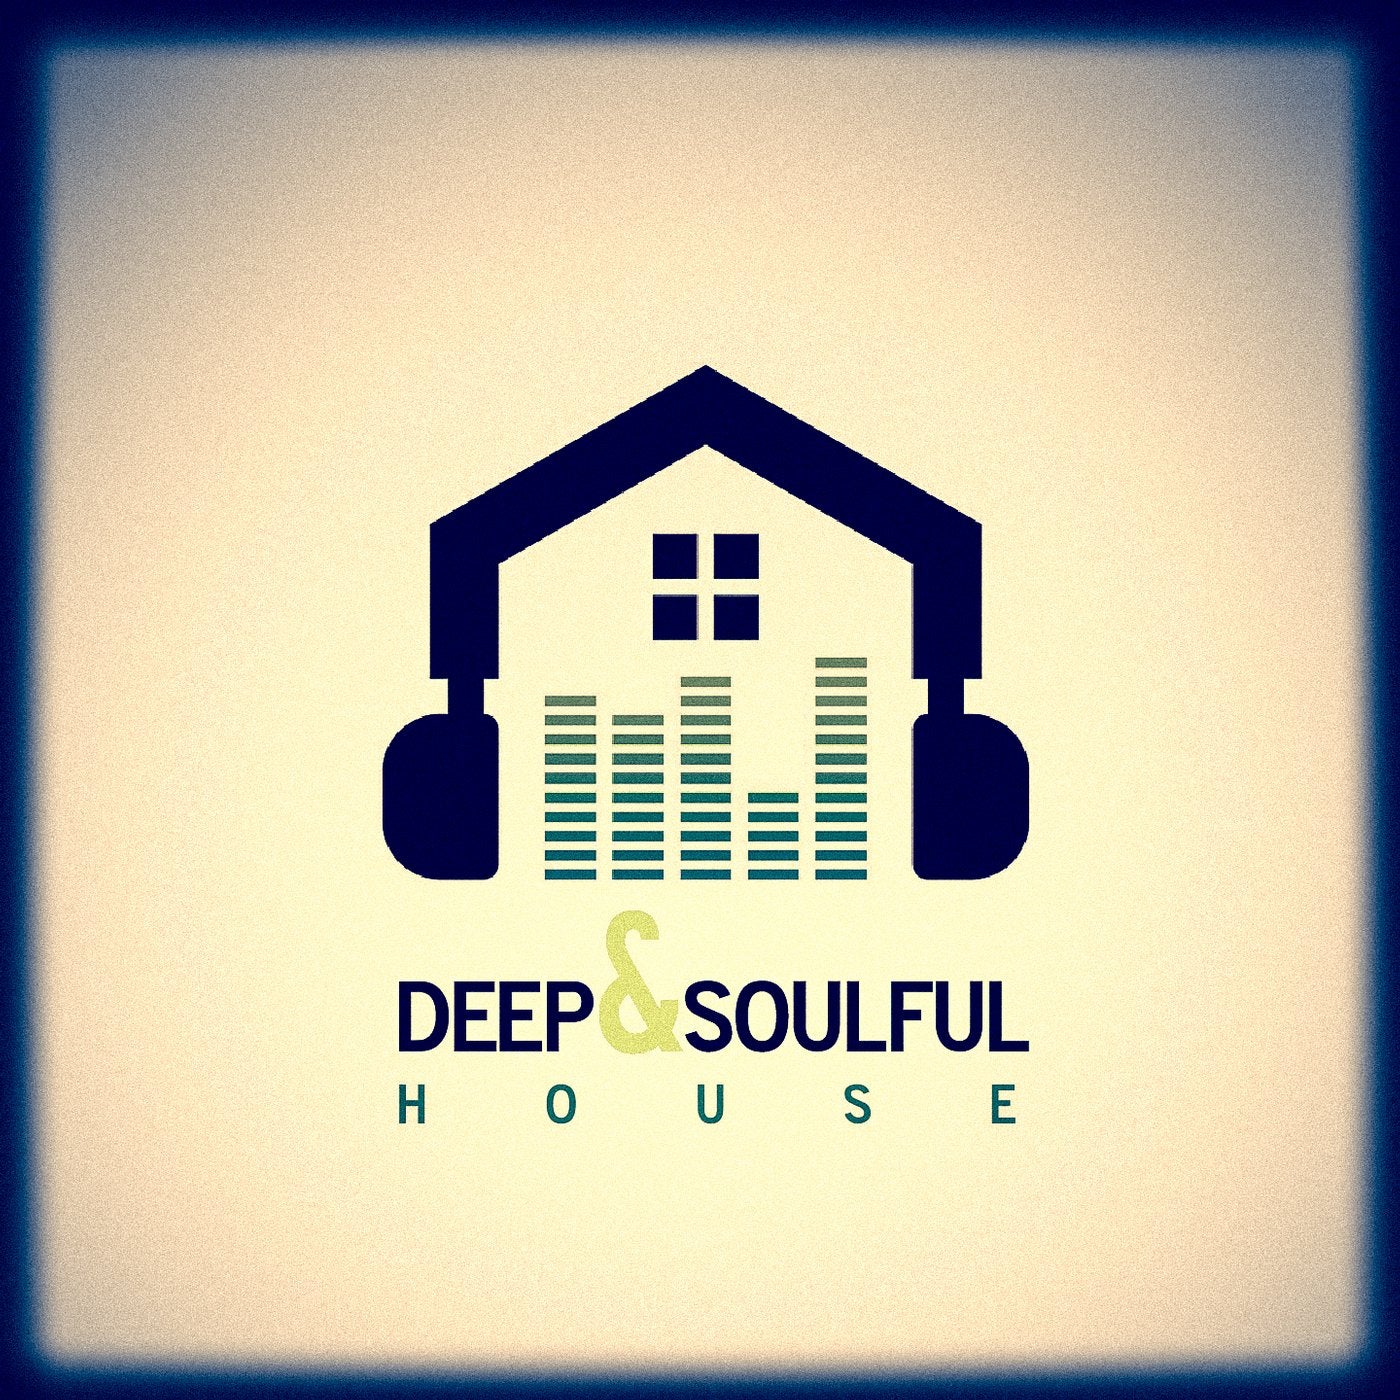 Deep & Soulful House